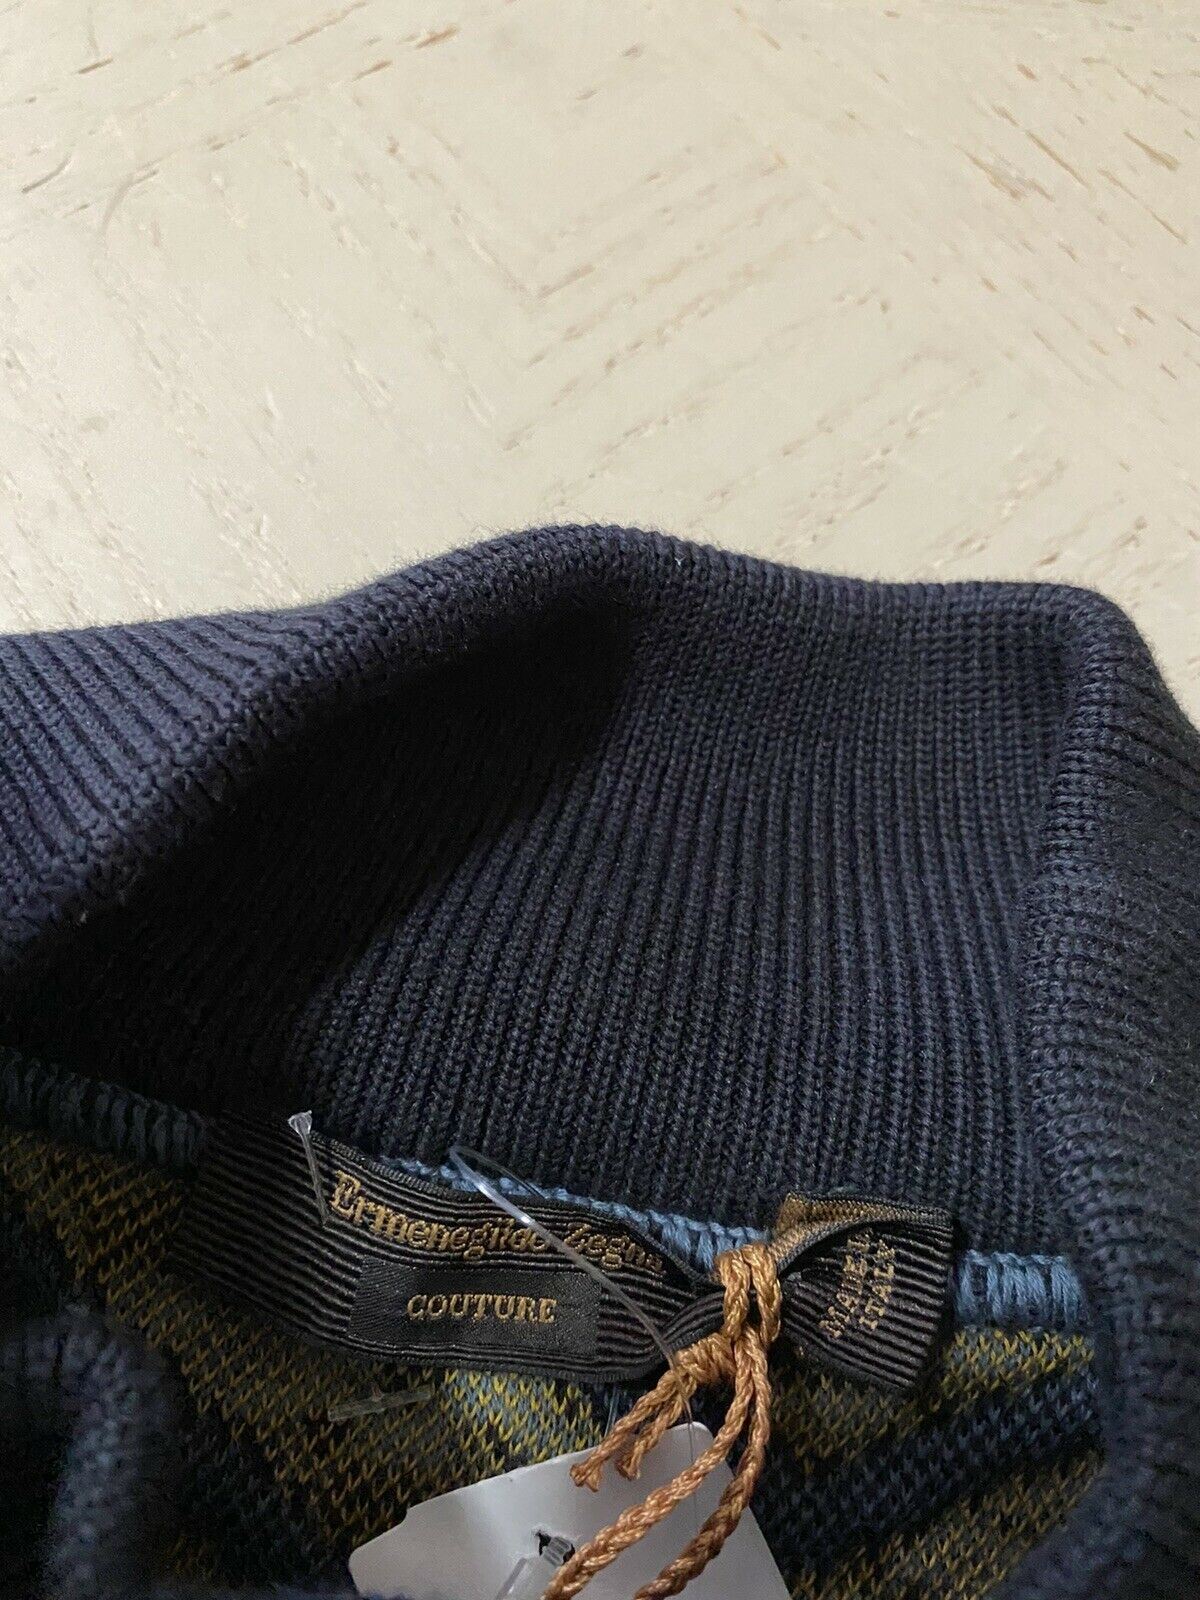 NWT $1295 Ermenegildo Zegna Couture Пуловер Tur Свитер Темно-синий M (50 евро)